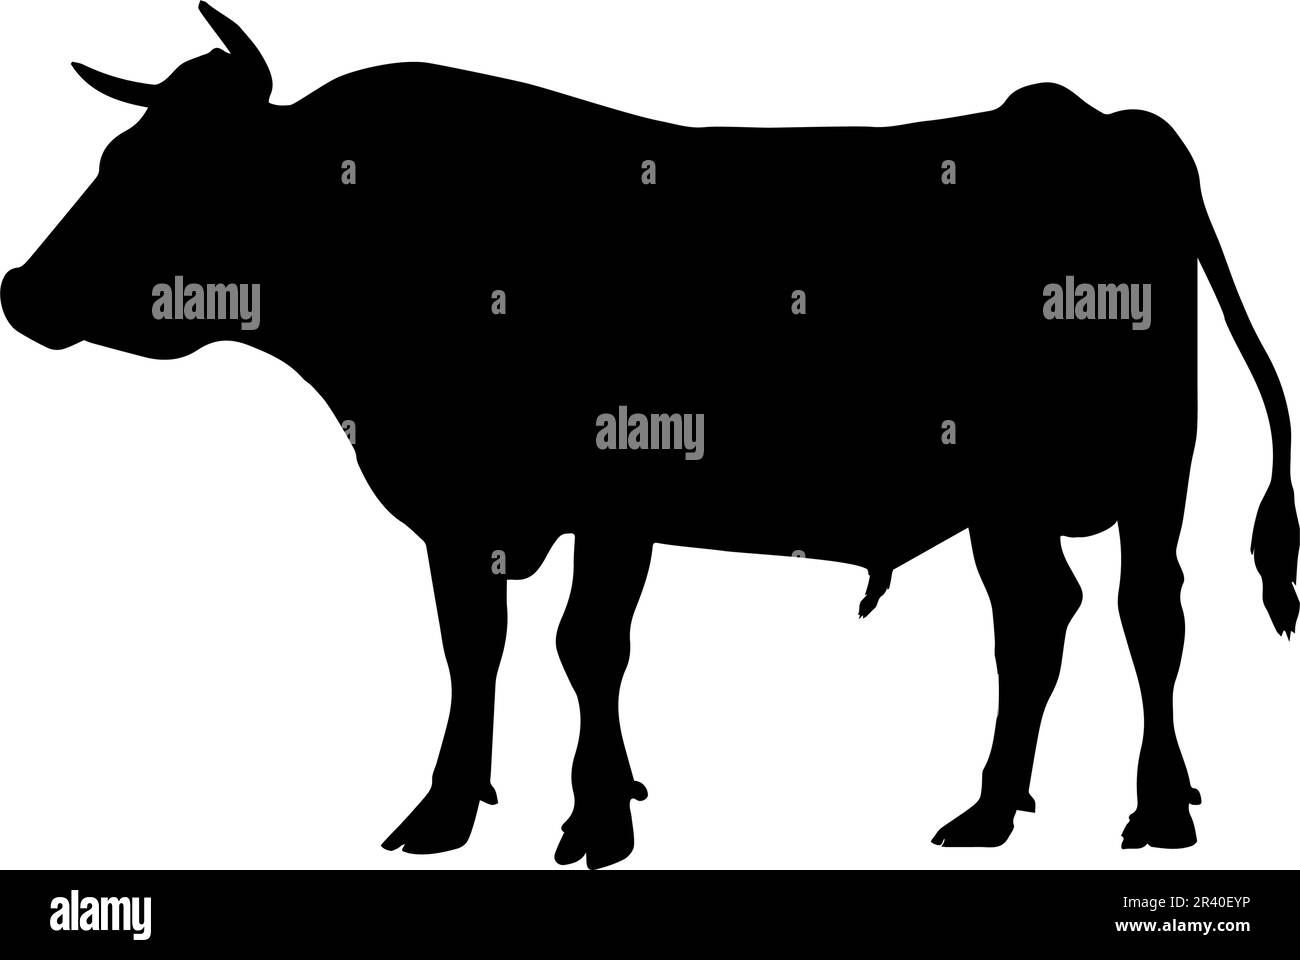 Bull silhouette isolated on white background. vector illustration Stock Vector